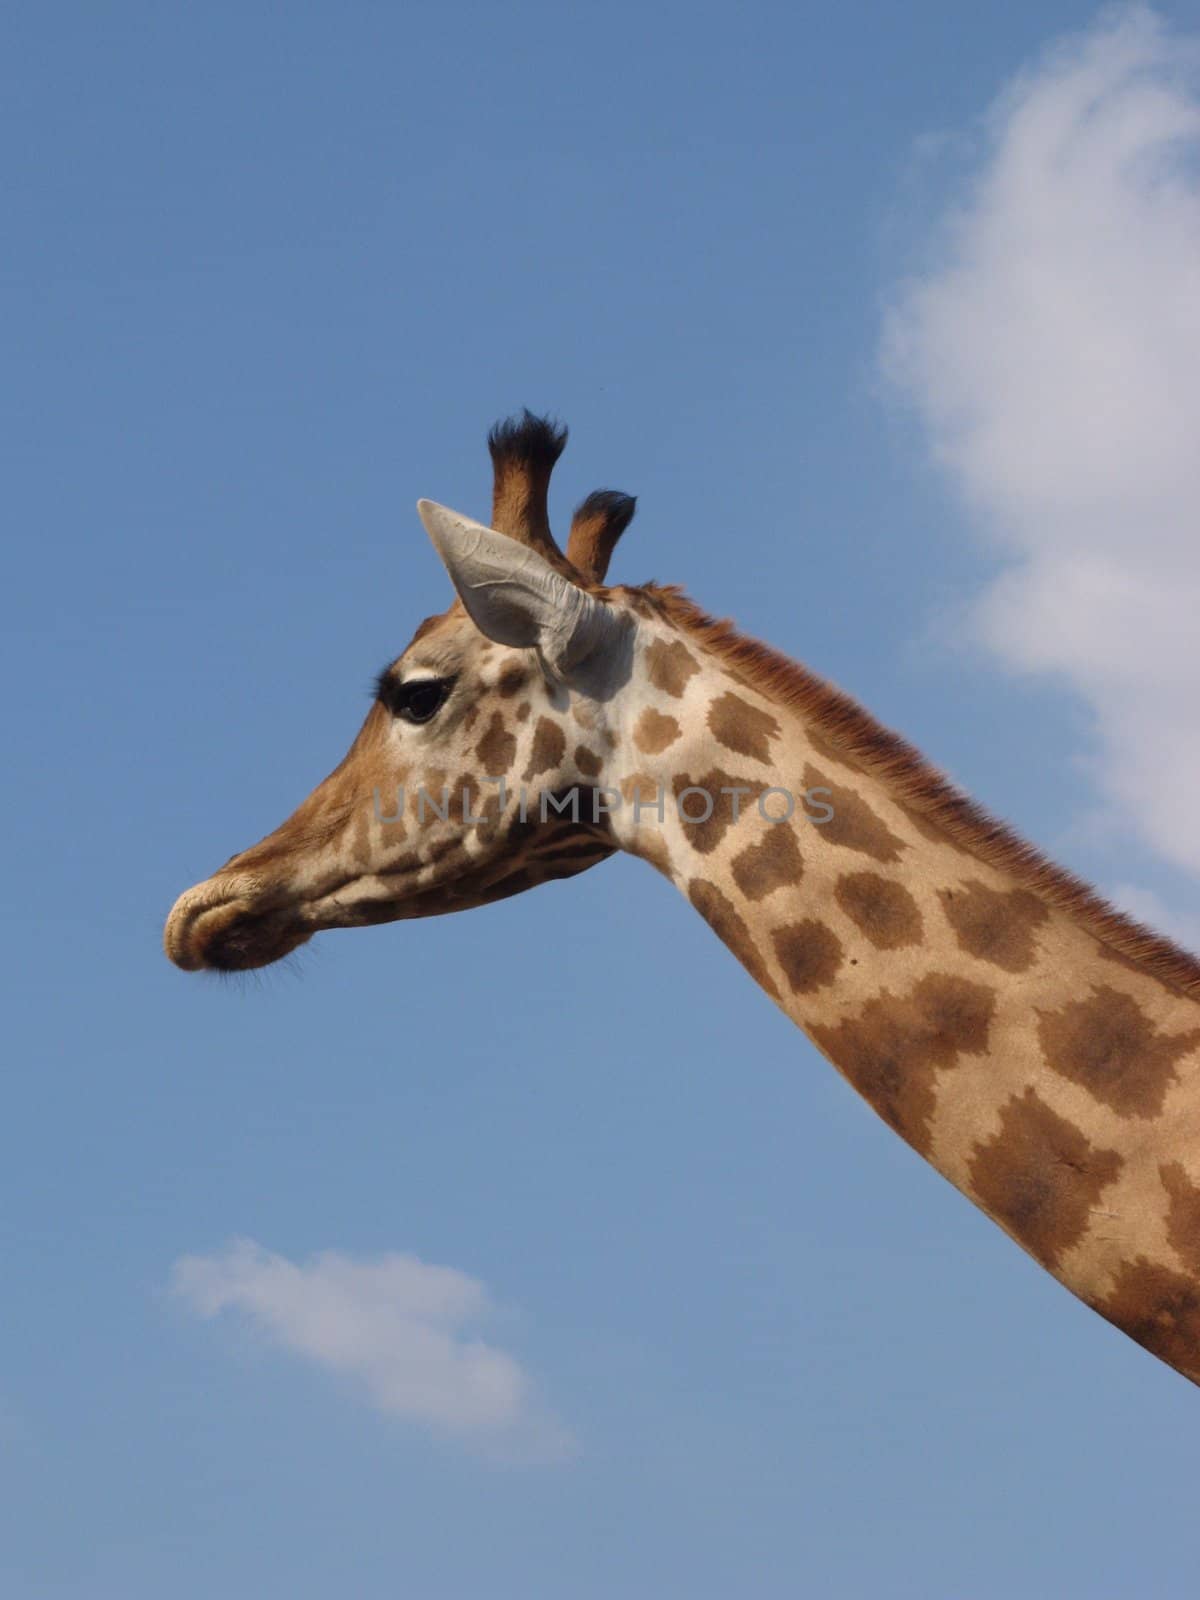 over a blue sky background the giraffe's head